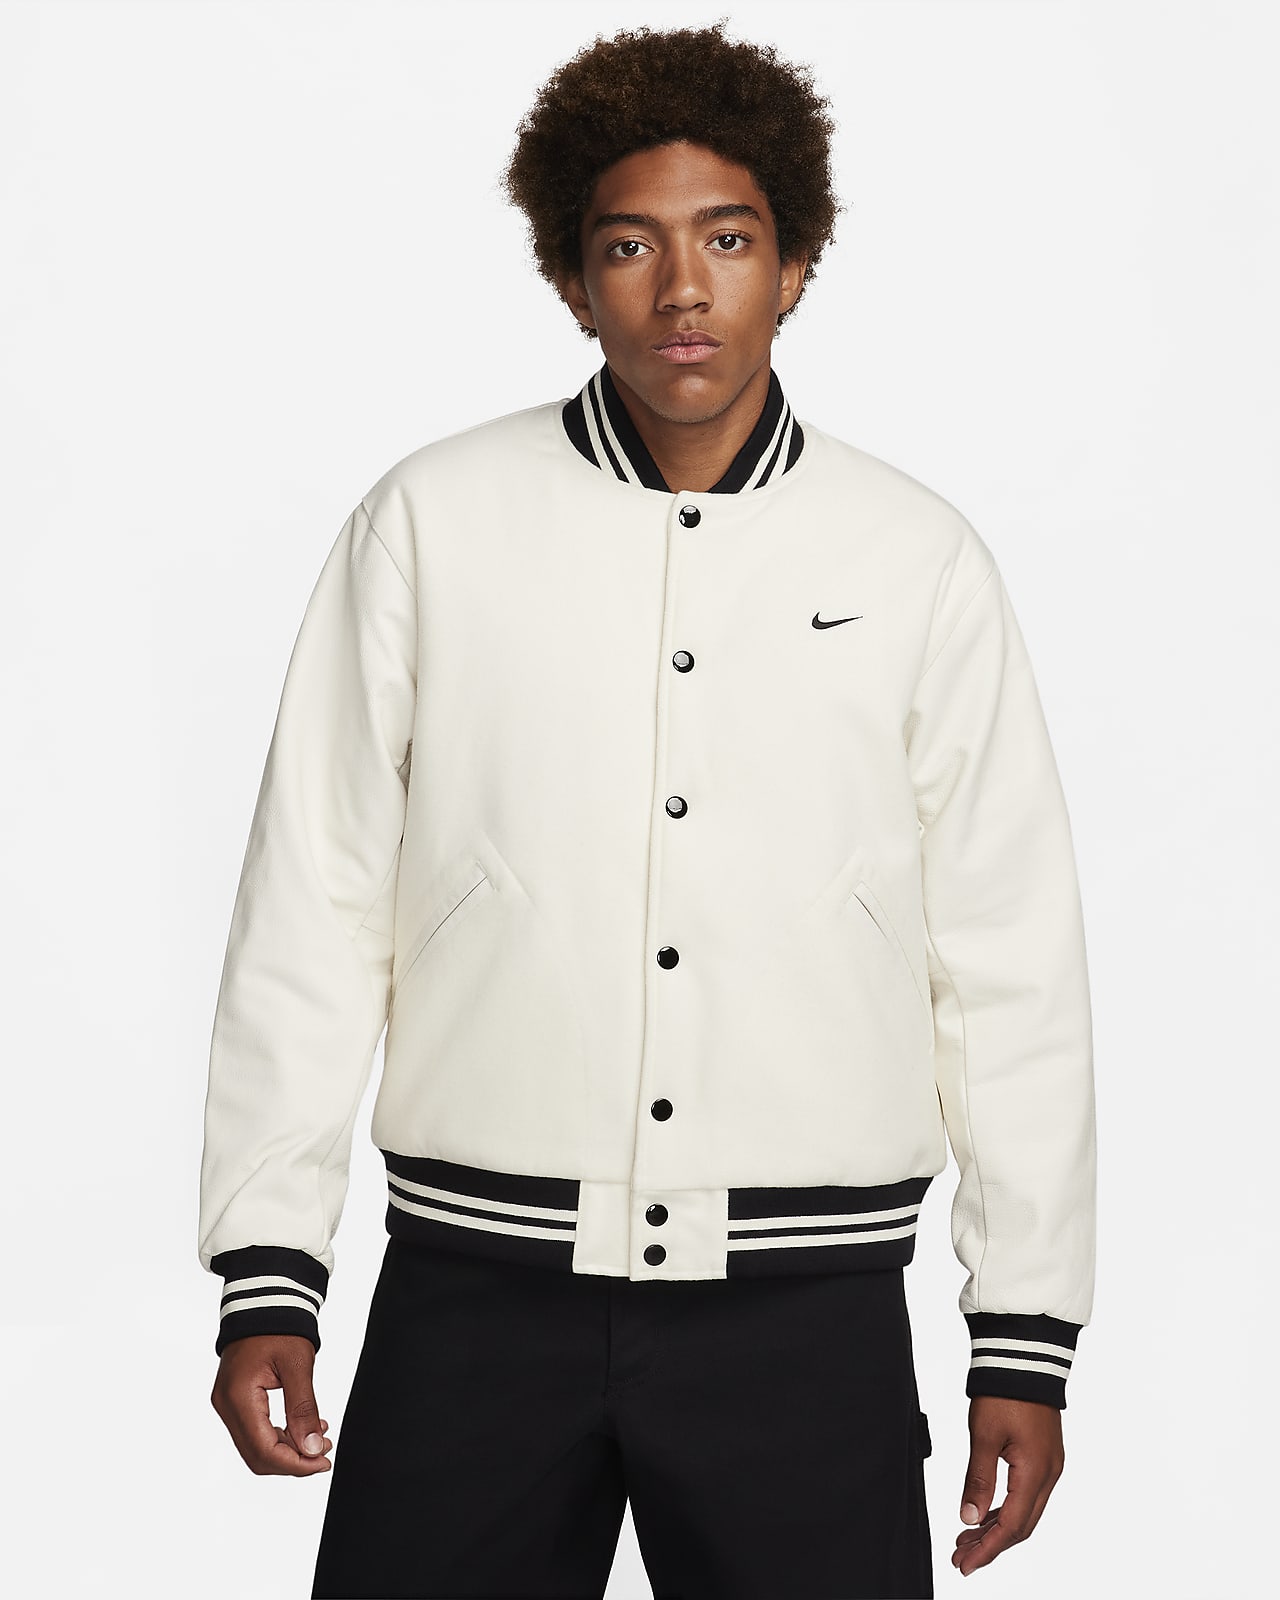 Nike Authentics Men's Varsity Jacket. Nike SI